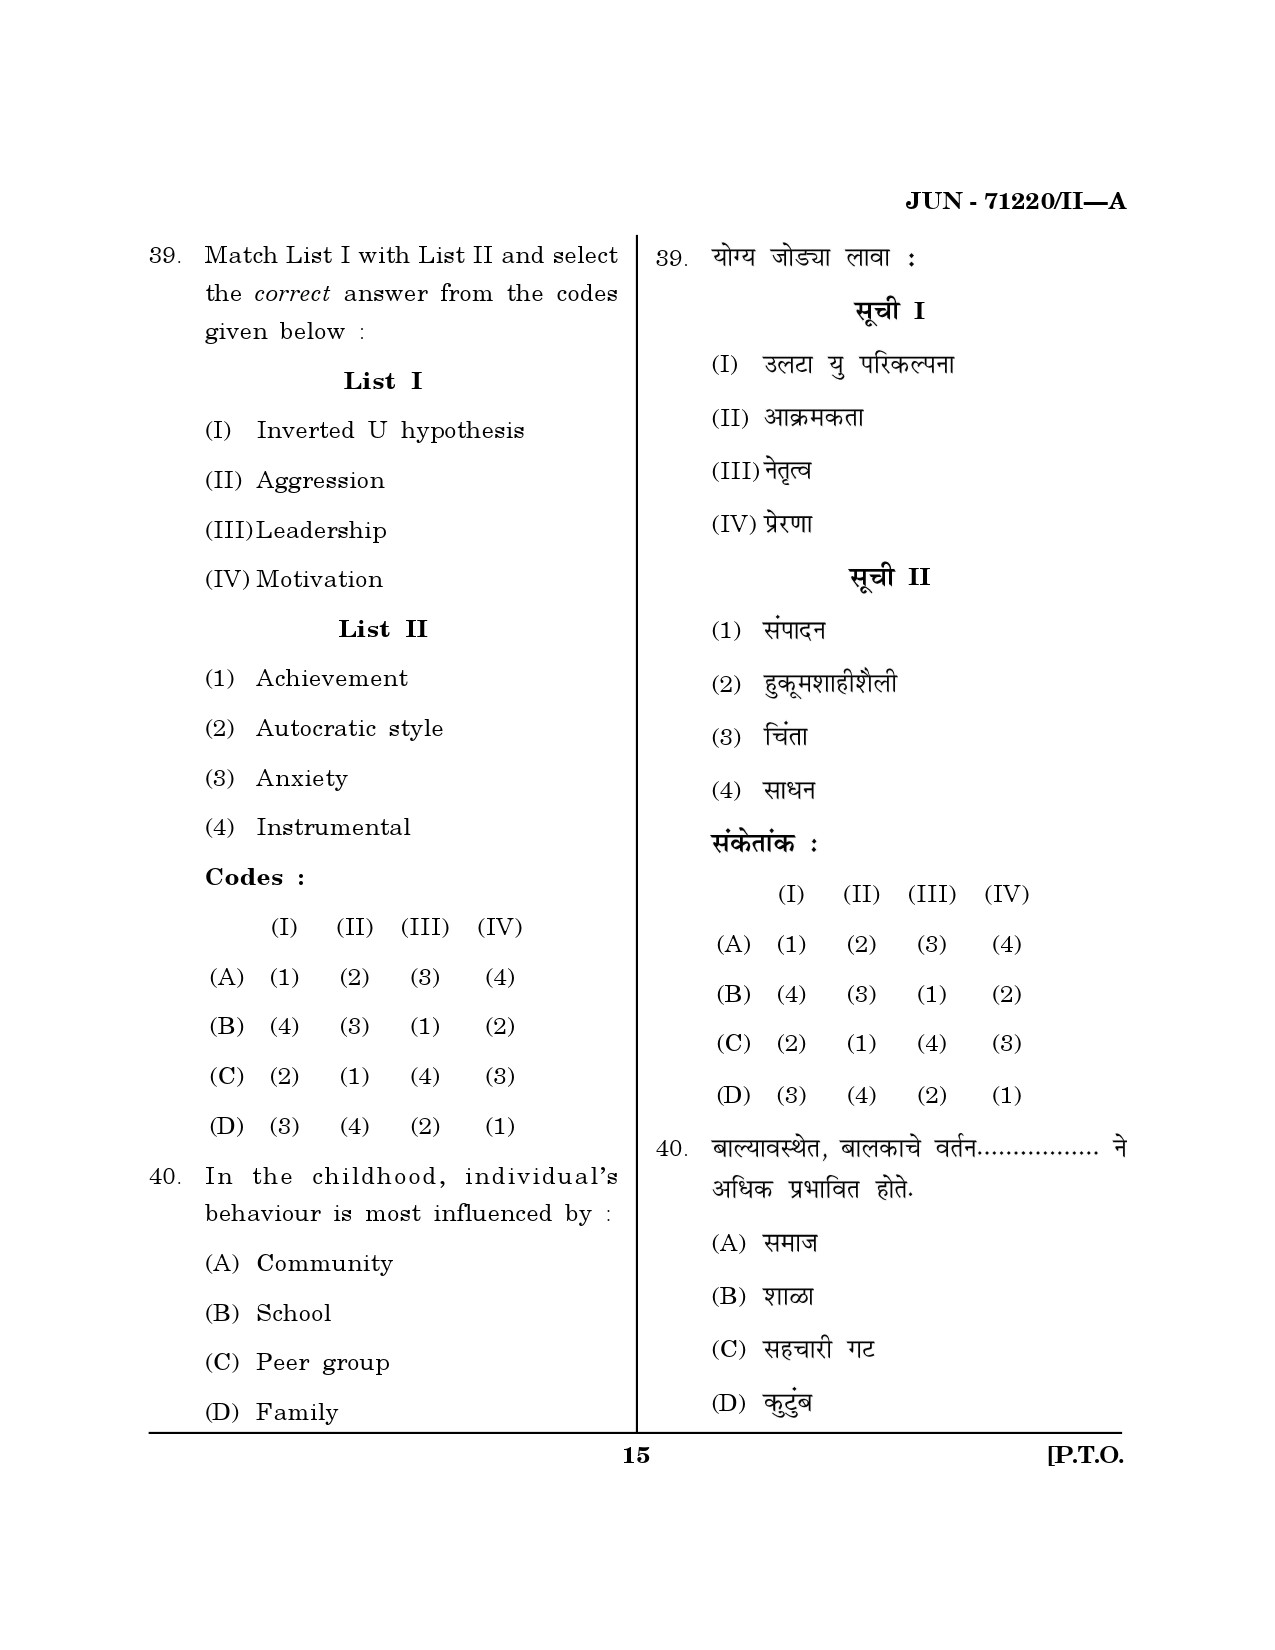 Maharashtra SET Physical Education Question Paper II June 2020 14